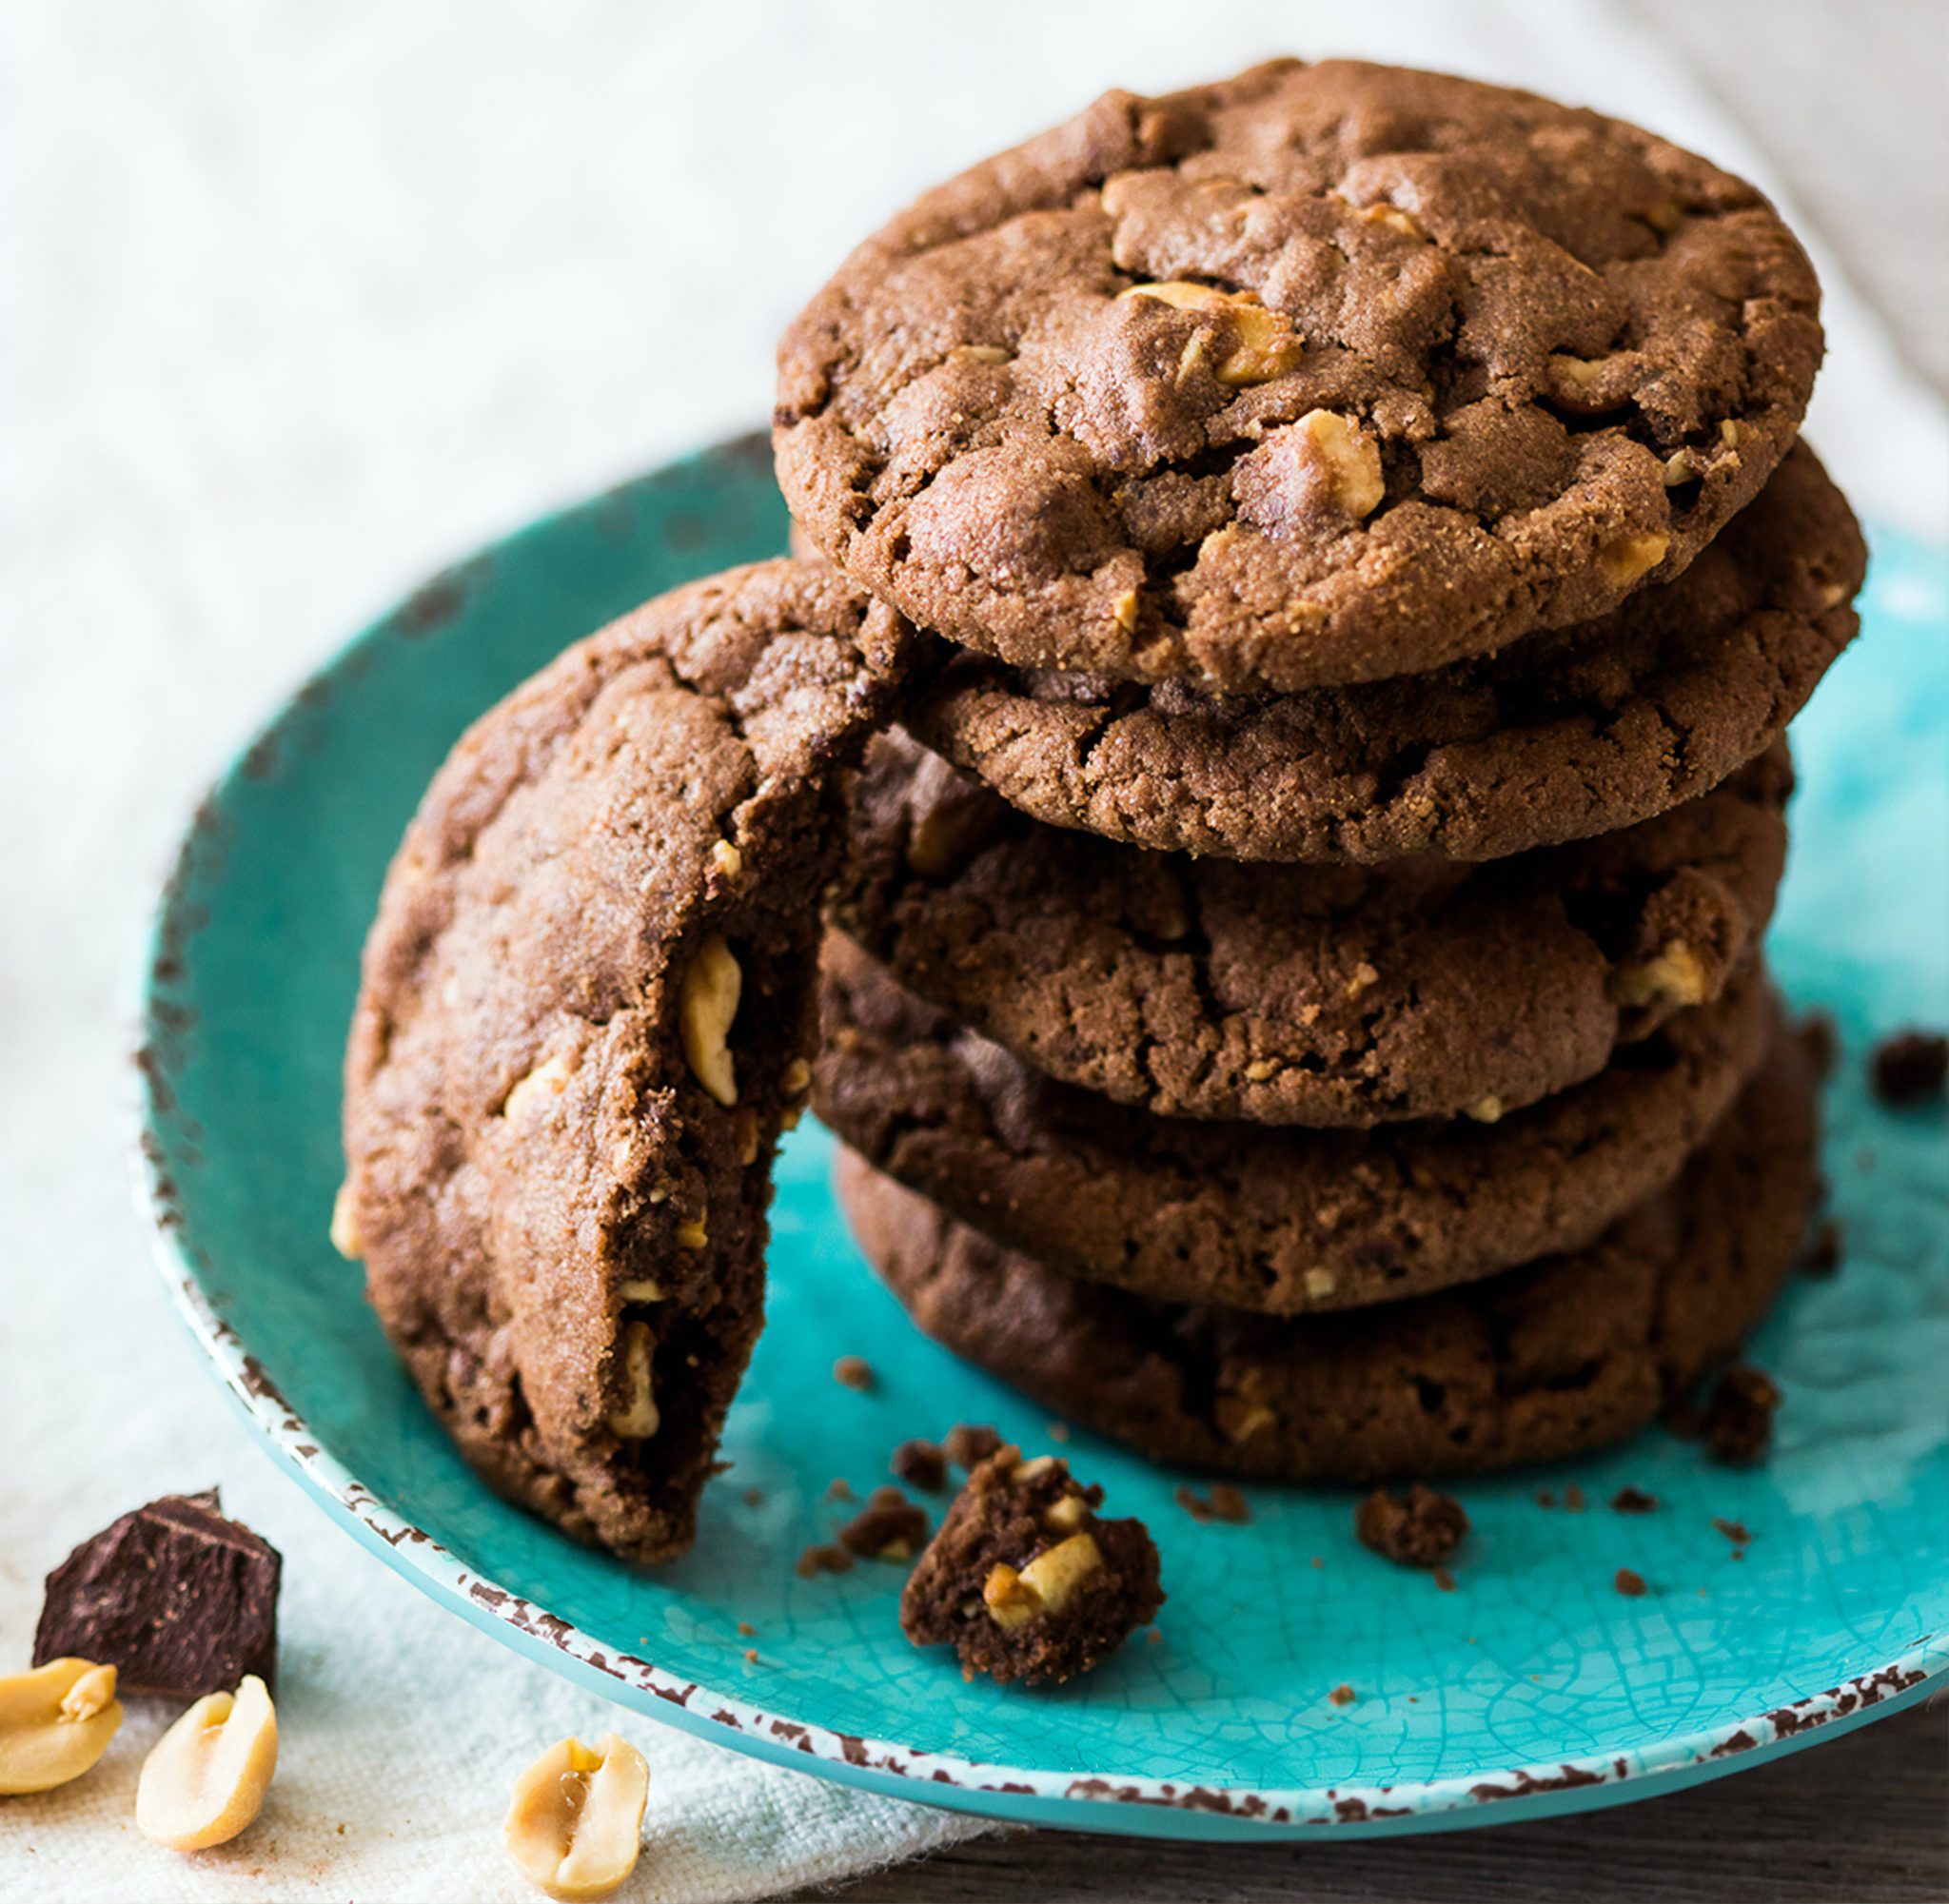 How To Make Kief Cookies - Emjay Blog